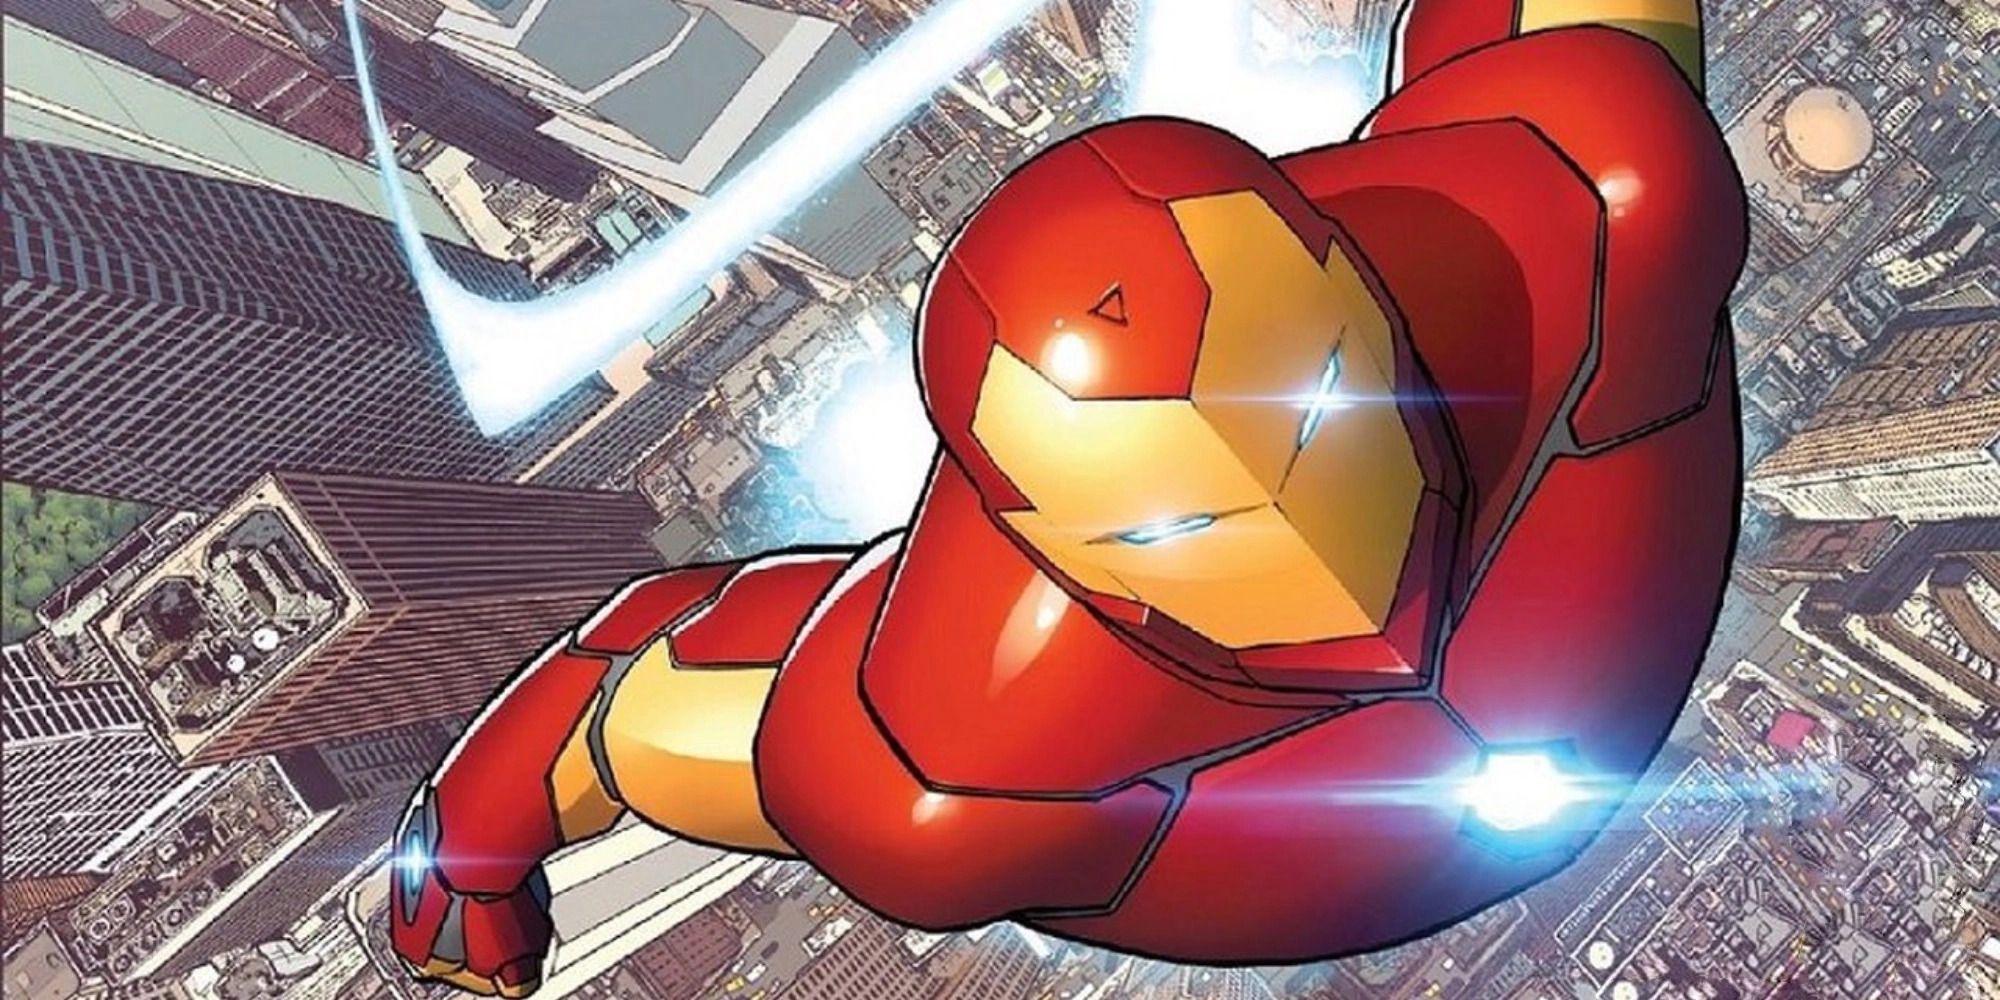 Iron Man flying above city